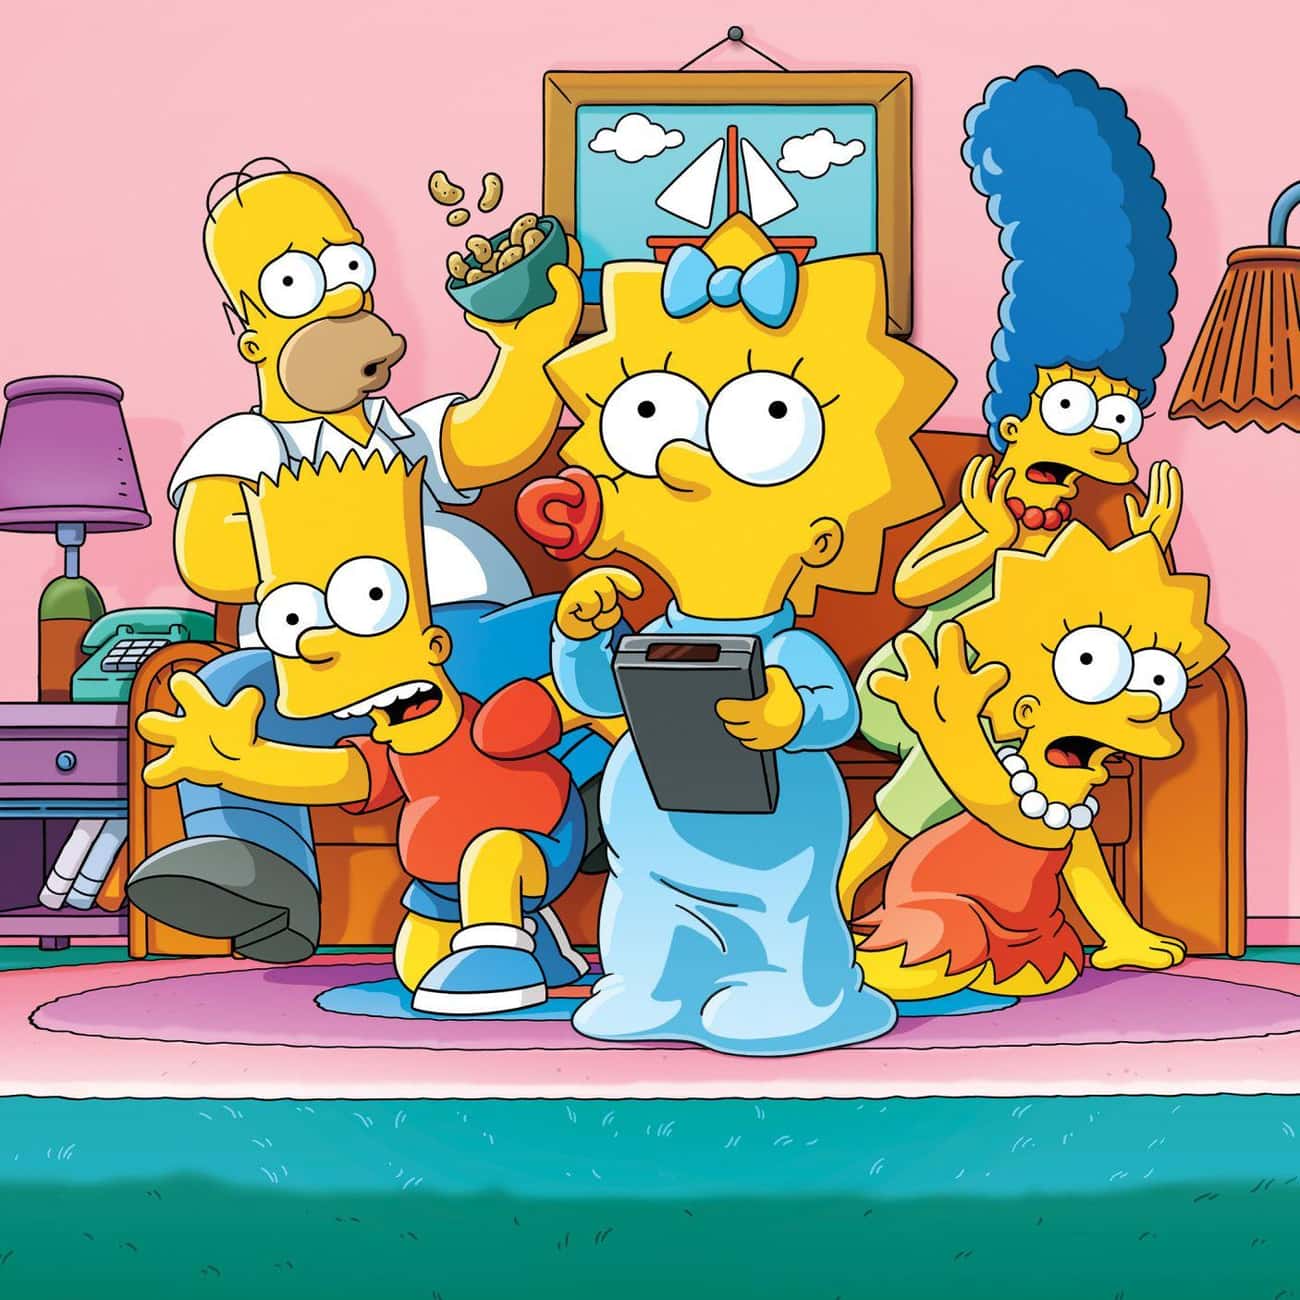 The Simpsons - Season 32